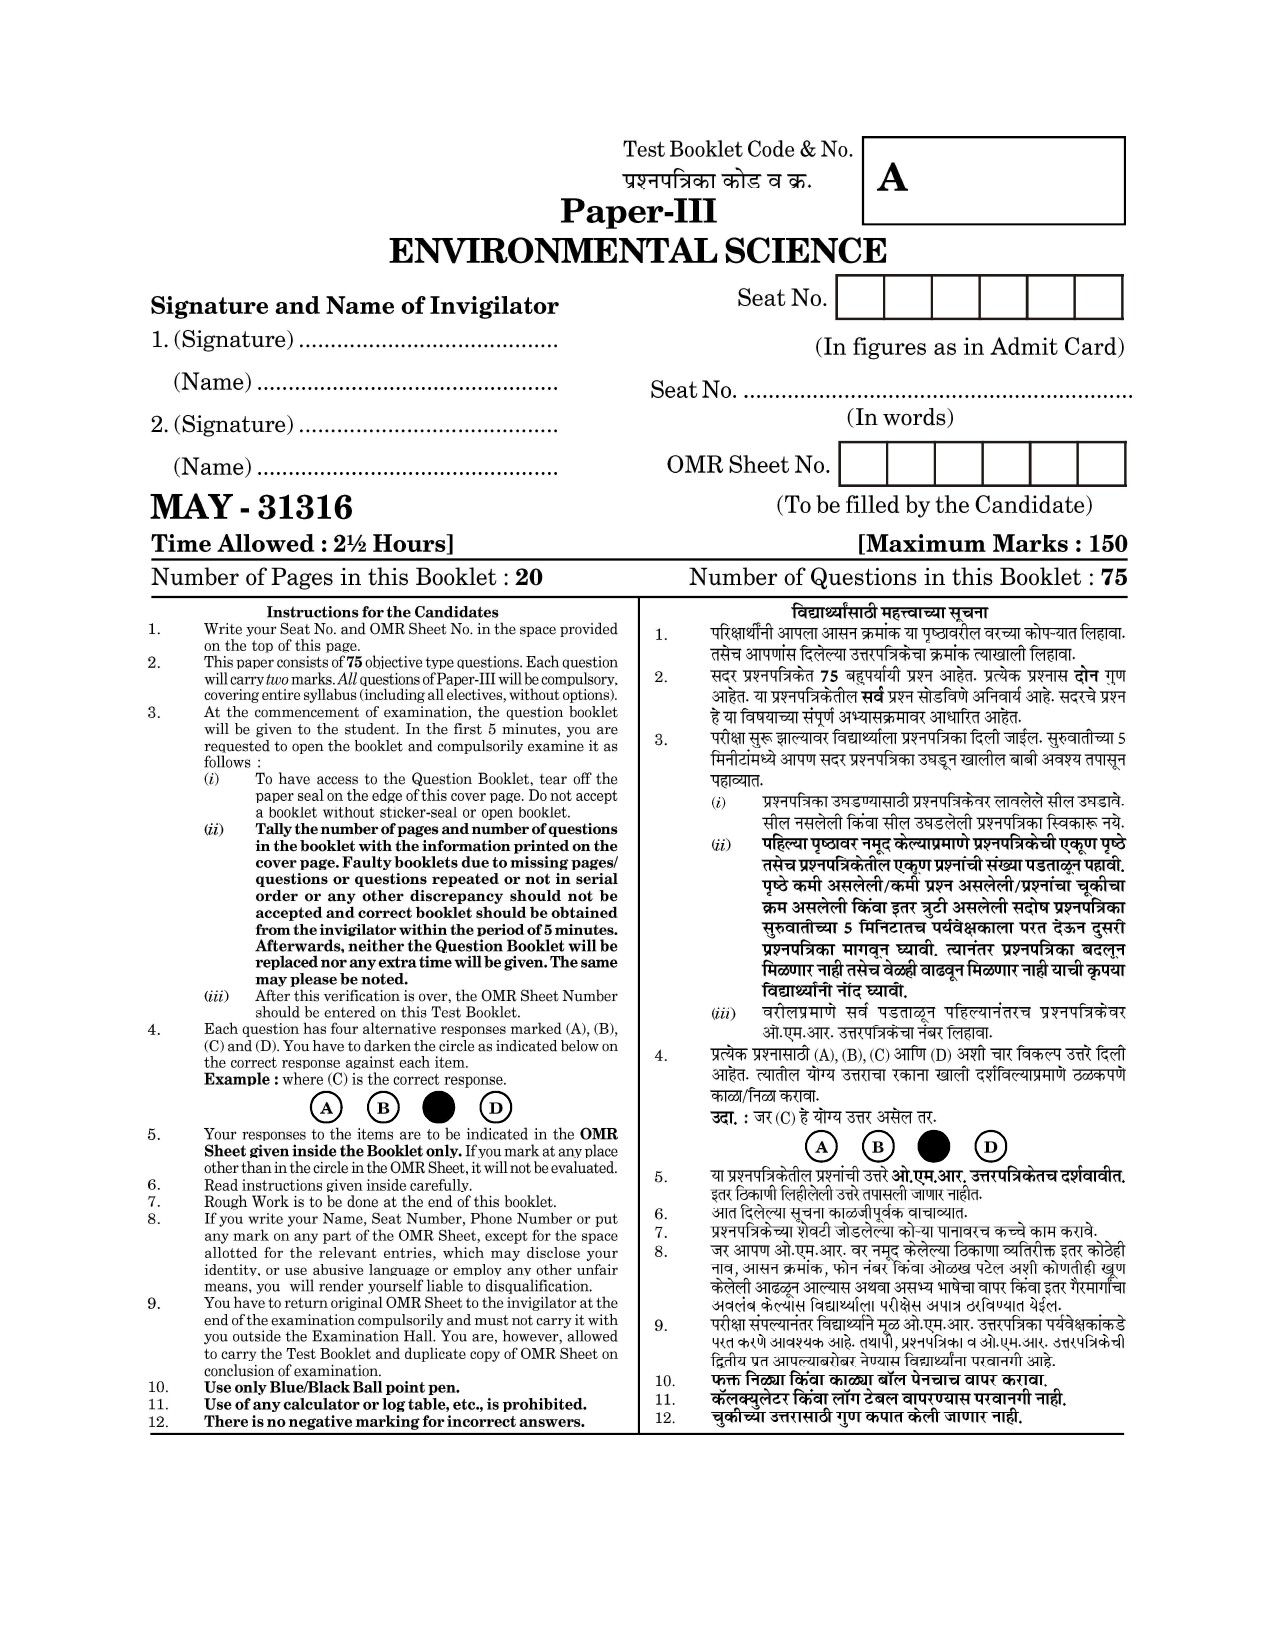 Maharashtra SET Environmental Sciences Question Paper III May 2016 1